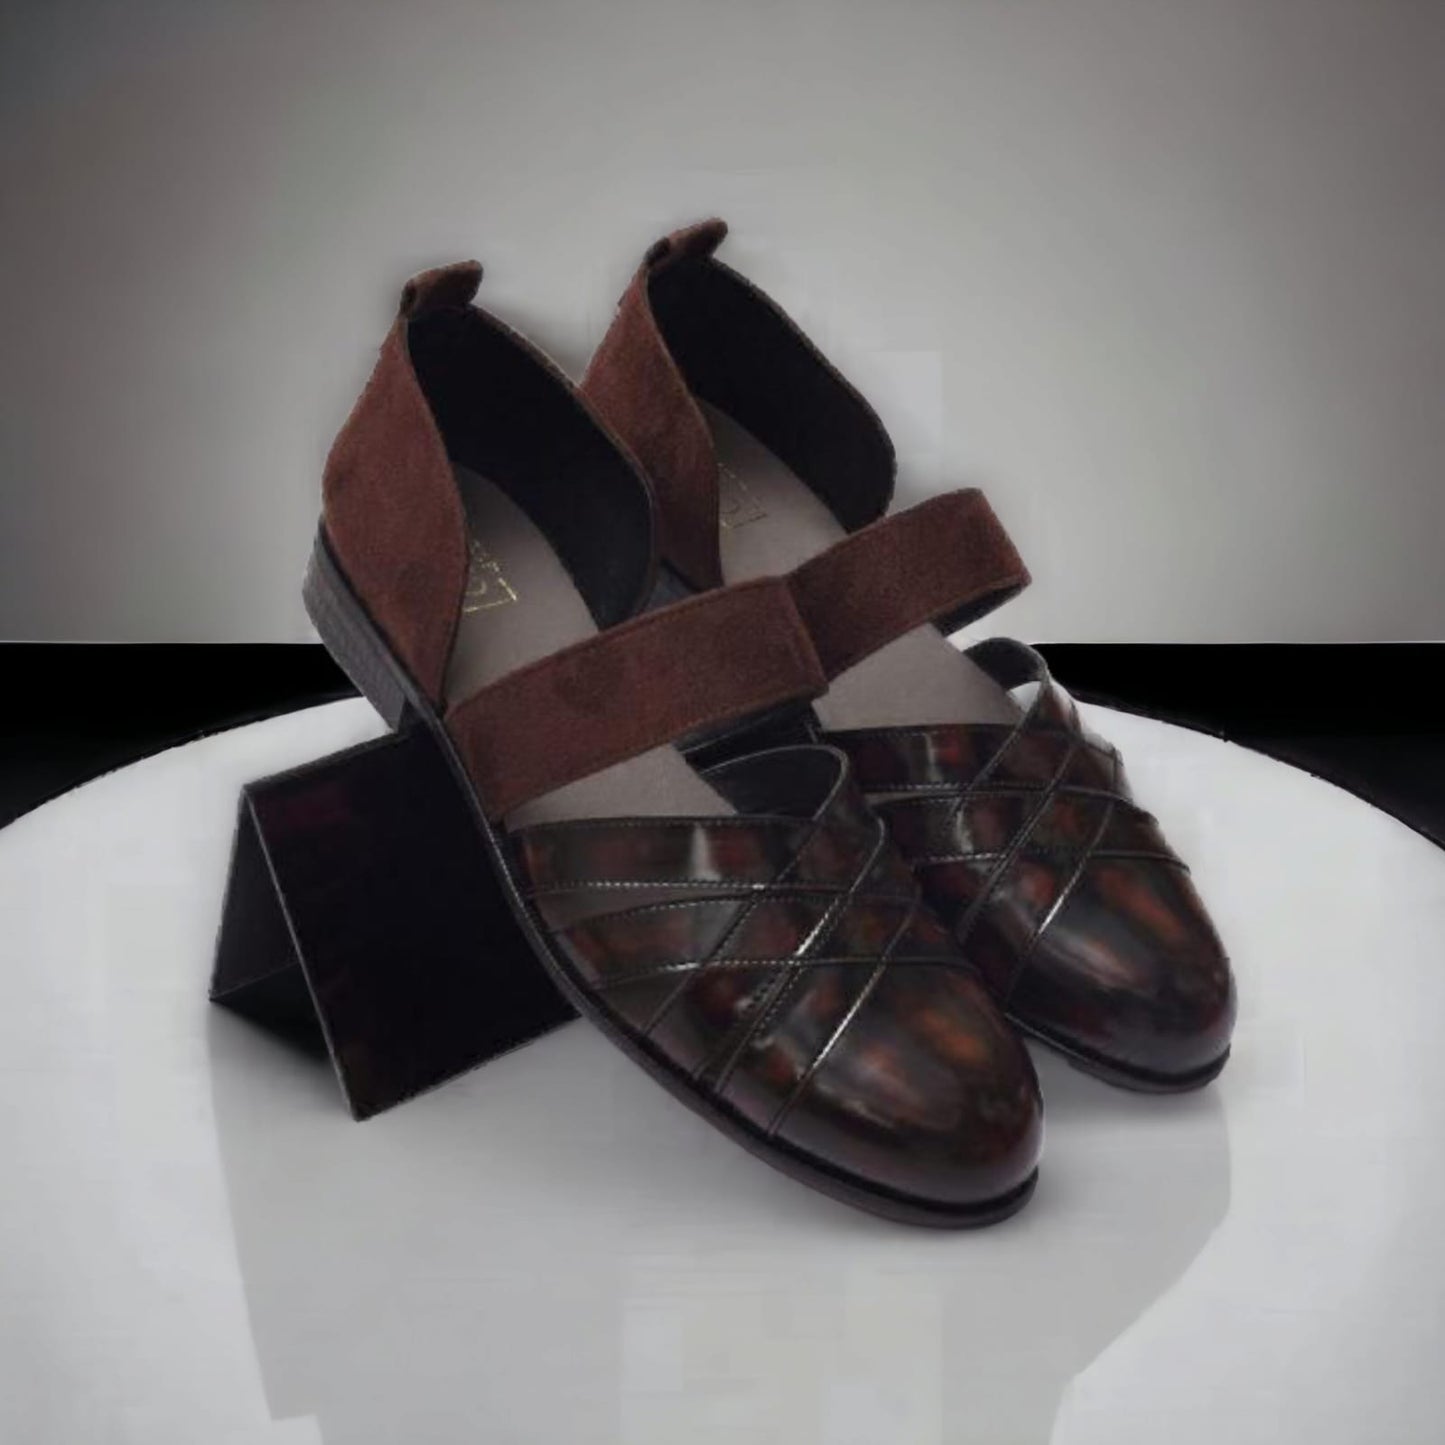 Jack Marc Men's Fashion Traditional Attire Sandal